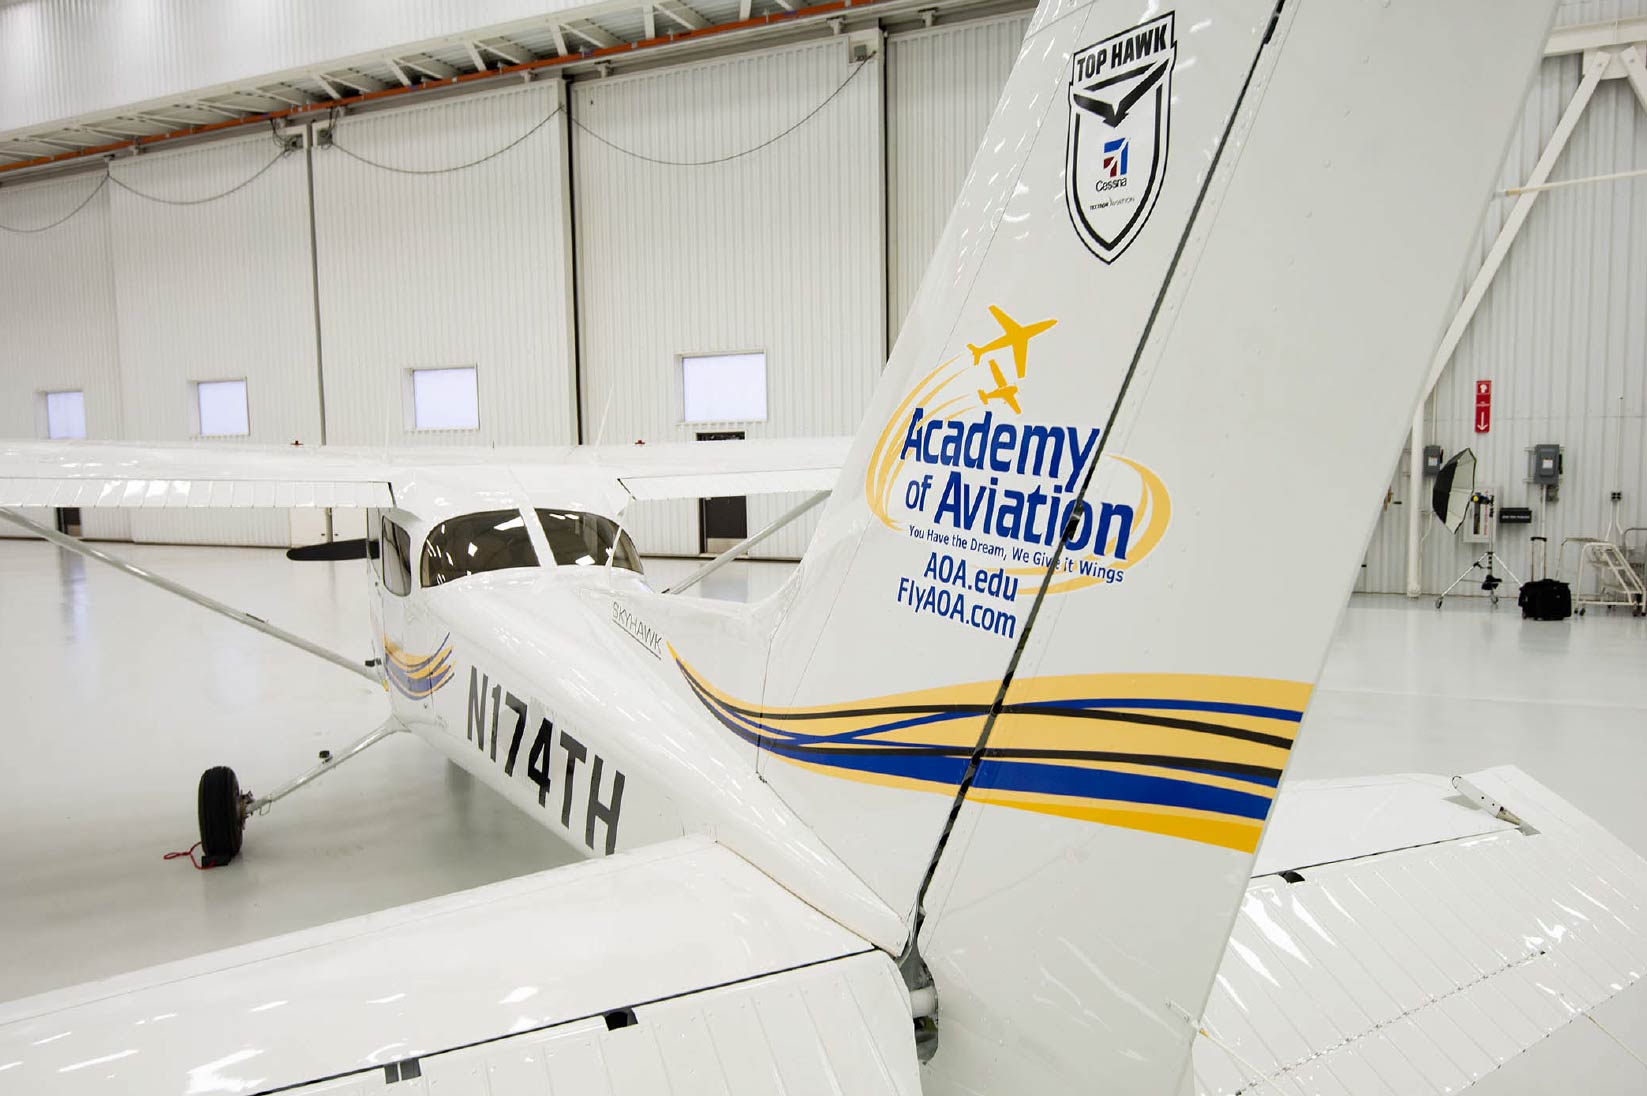 Academy of Aviation - Top Hawk Winner